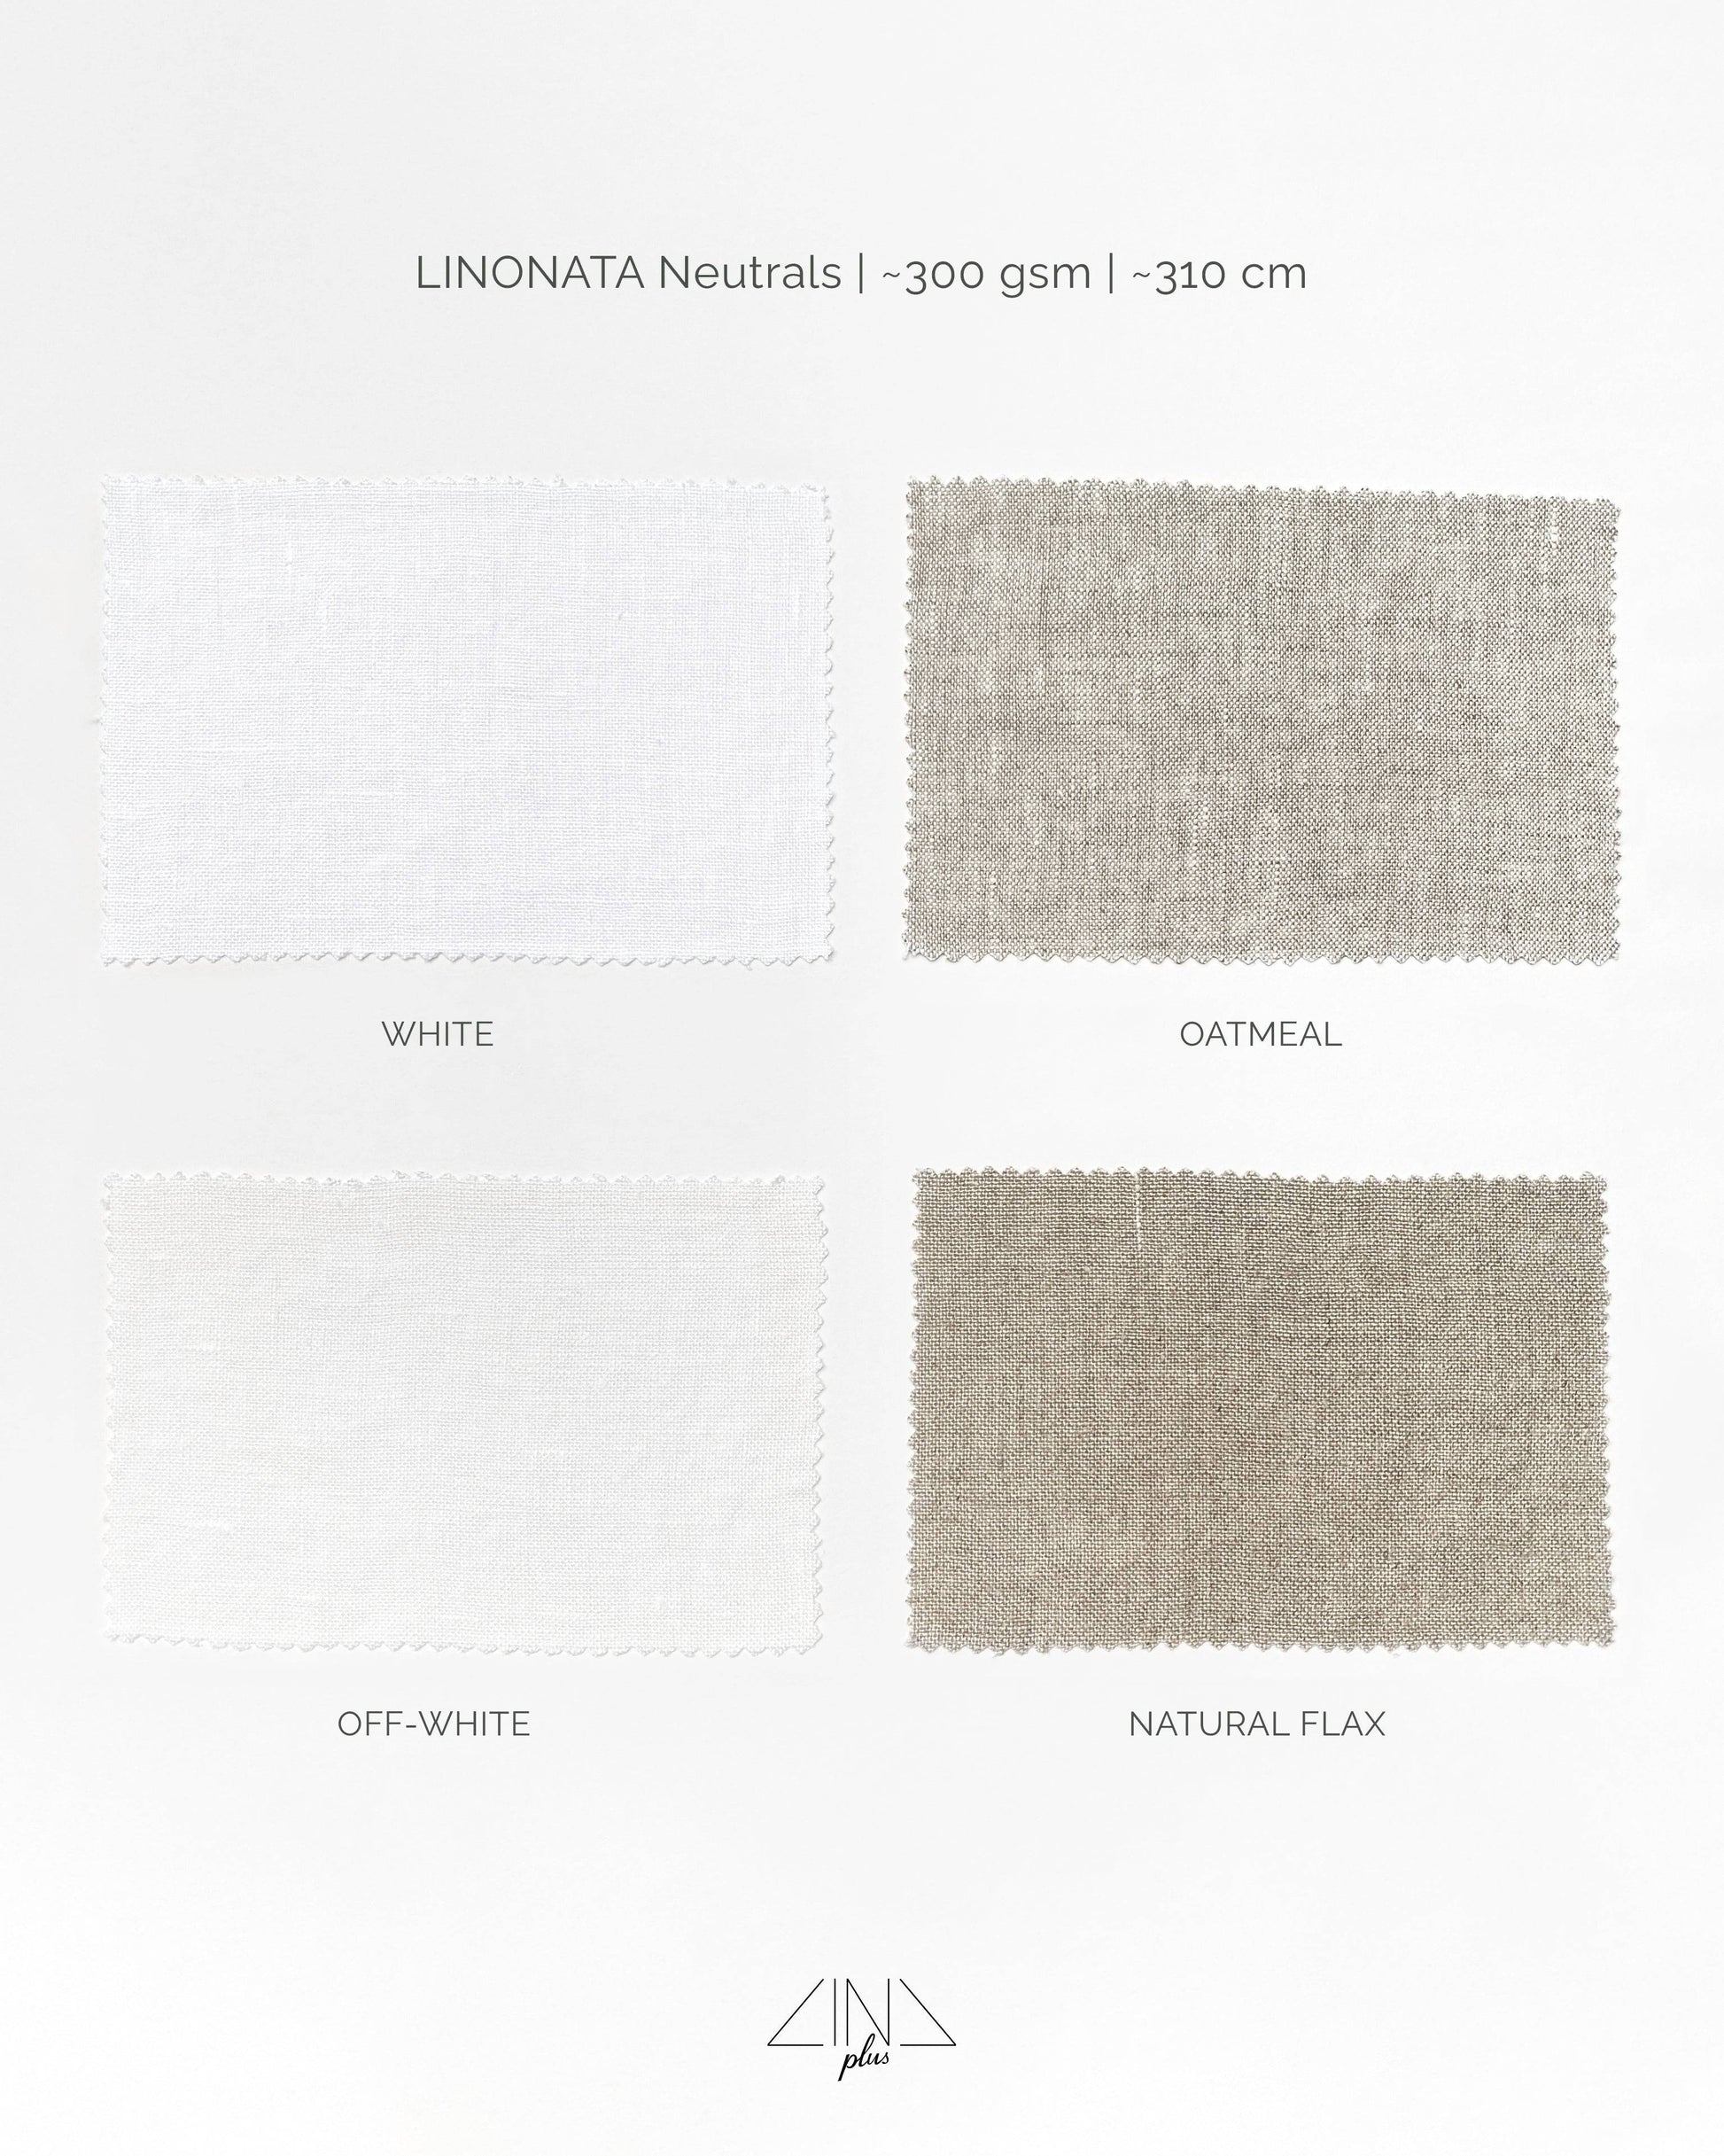 Heavy Undyed Linen Neutral color samples.